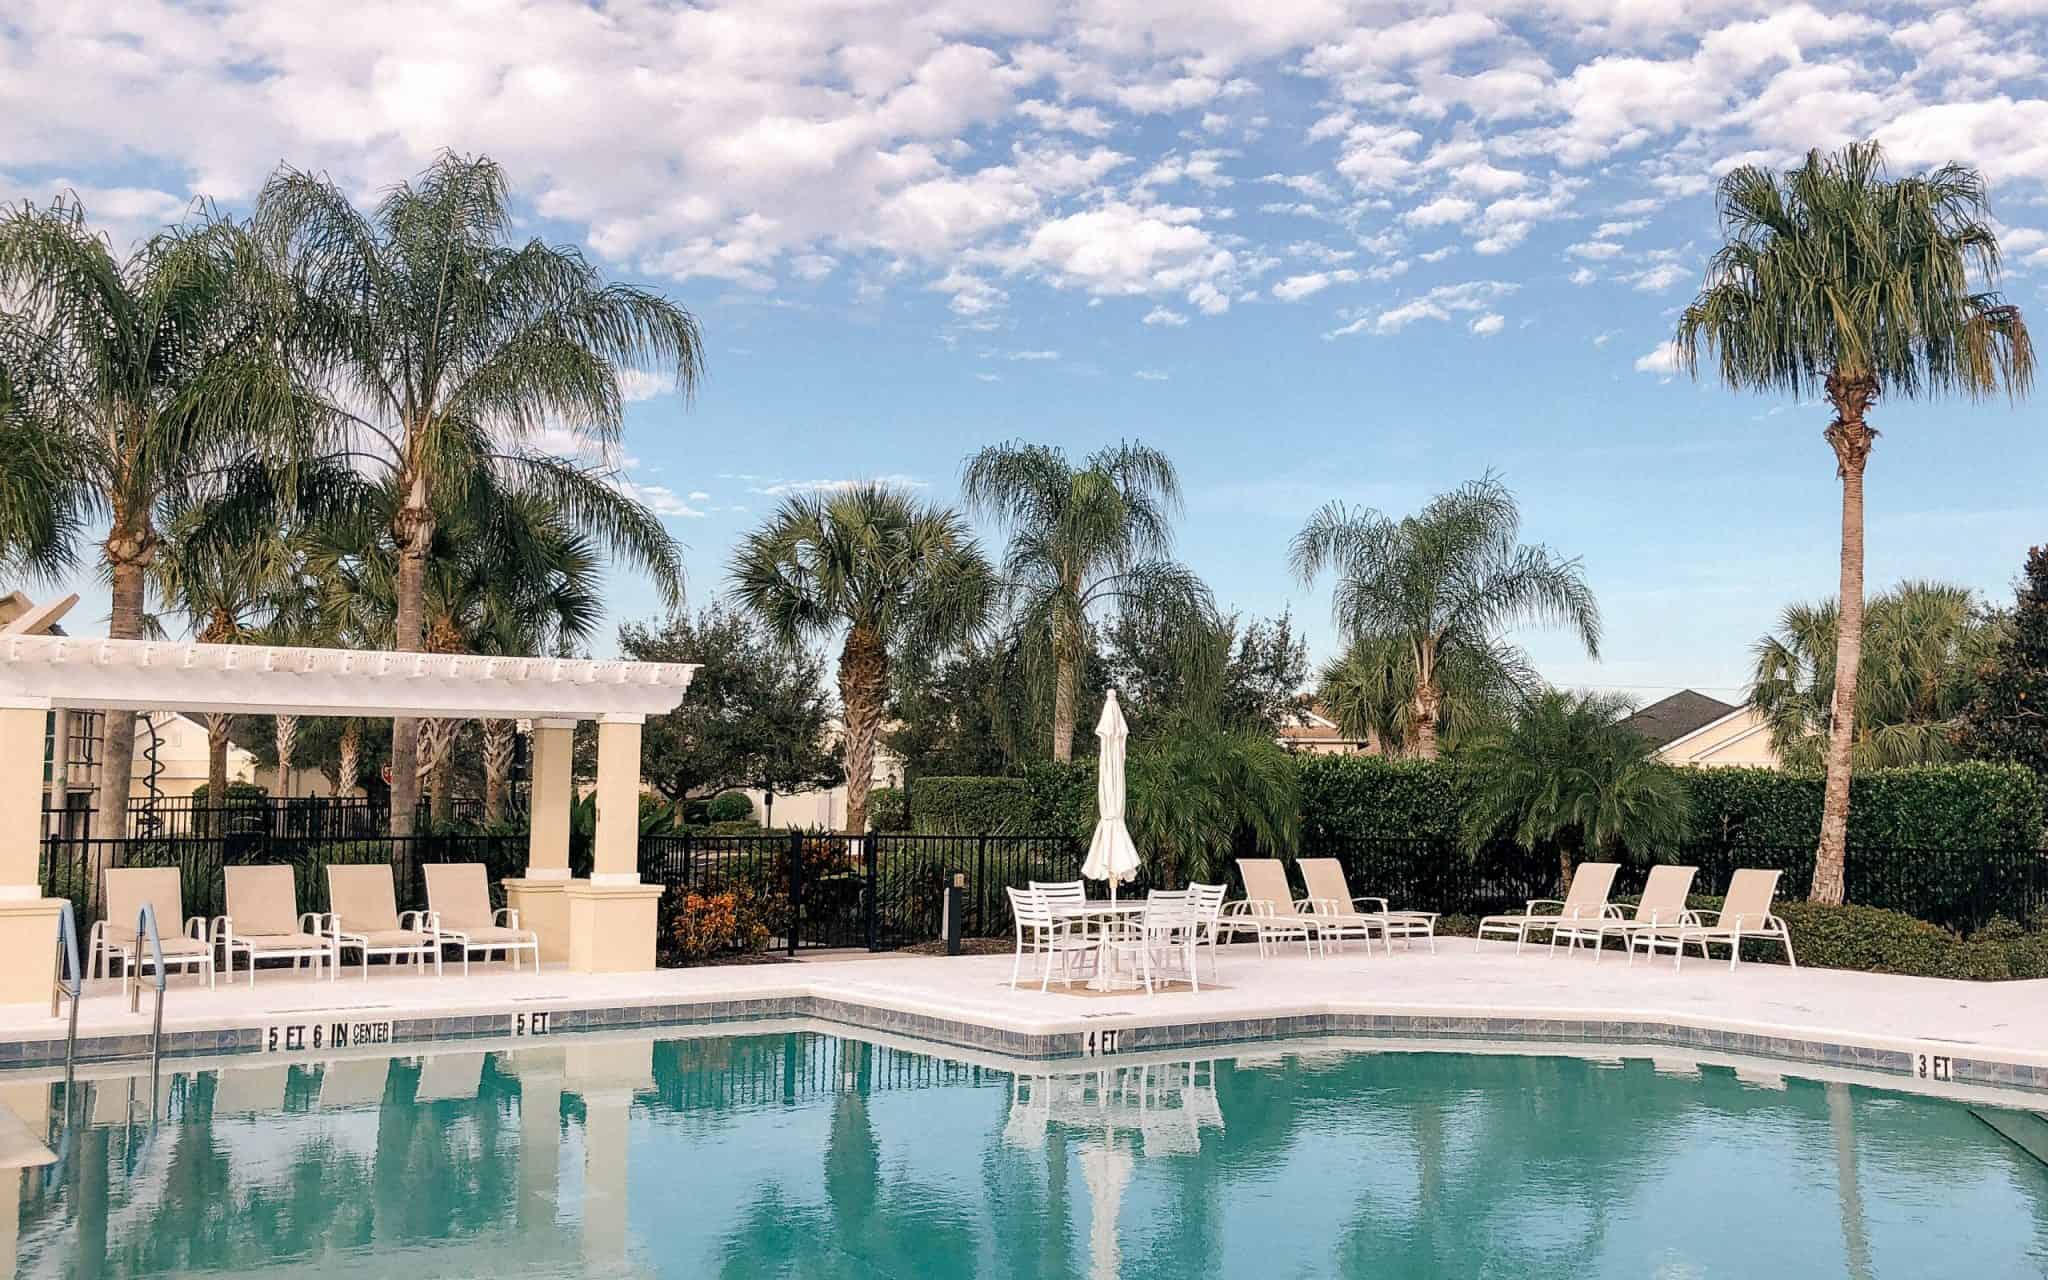 Sarasota, Florida, Pool, Swimming pool, palm trees, blue skies